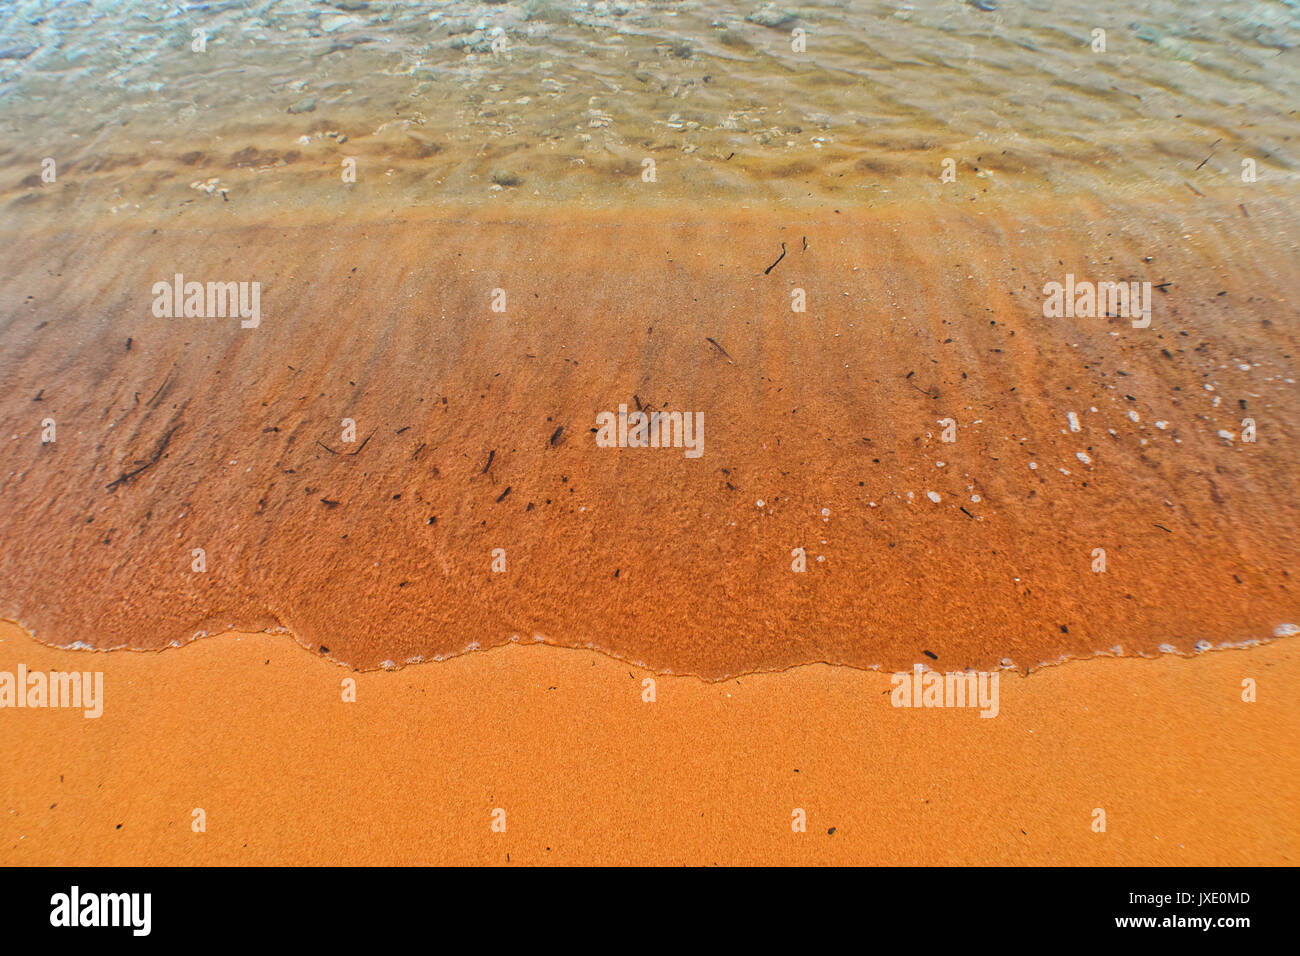 Sea lapping gently on an orange beach sand Stock Photo